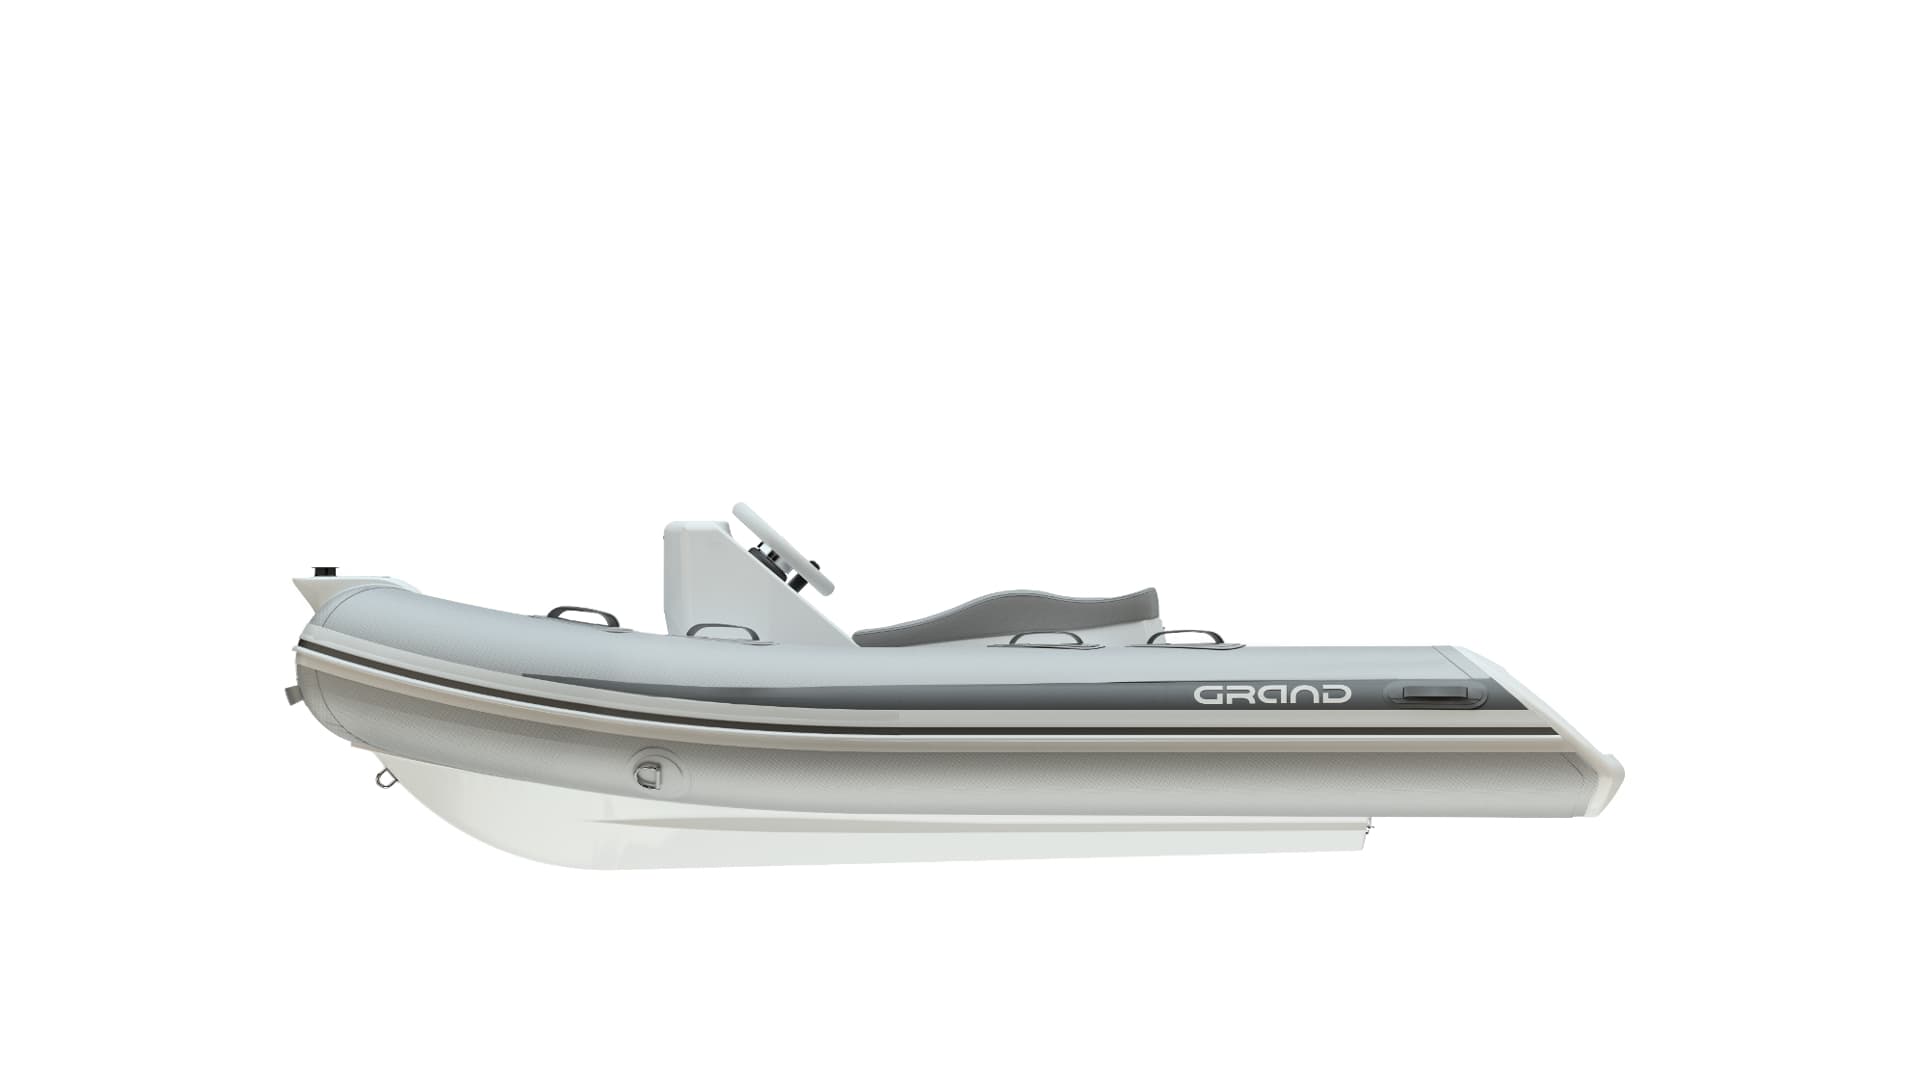 Надувная лодка с жестким дном GRAND Silver Line S330S, Надувная лодка GRAND Silver Line S330S, GRAND Silver Line S330SF, GRAND Silver Line S330S, GRAND S330SF, GRAND S370S, GRAND S370, Надувная лодка GRAND, Надувная лодка ГРАНД, Надувная лодка с жестким дном, RIB, Rigid Inflatable Boats